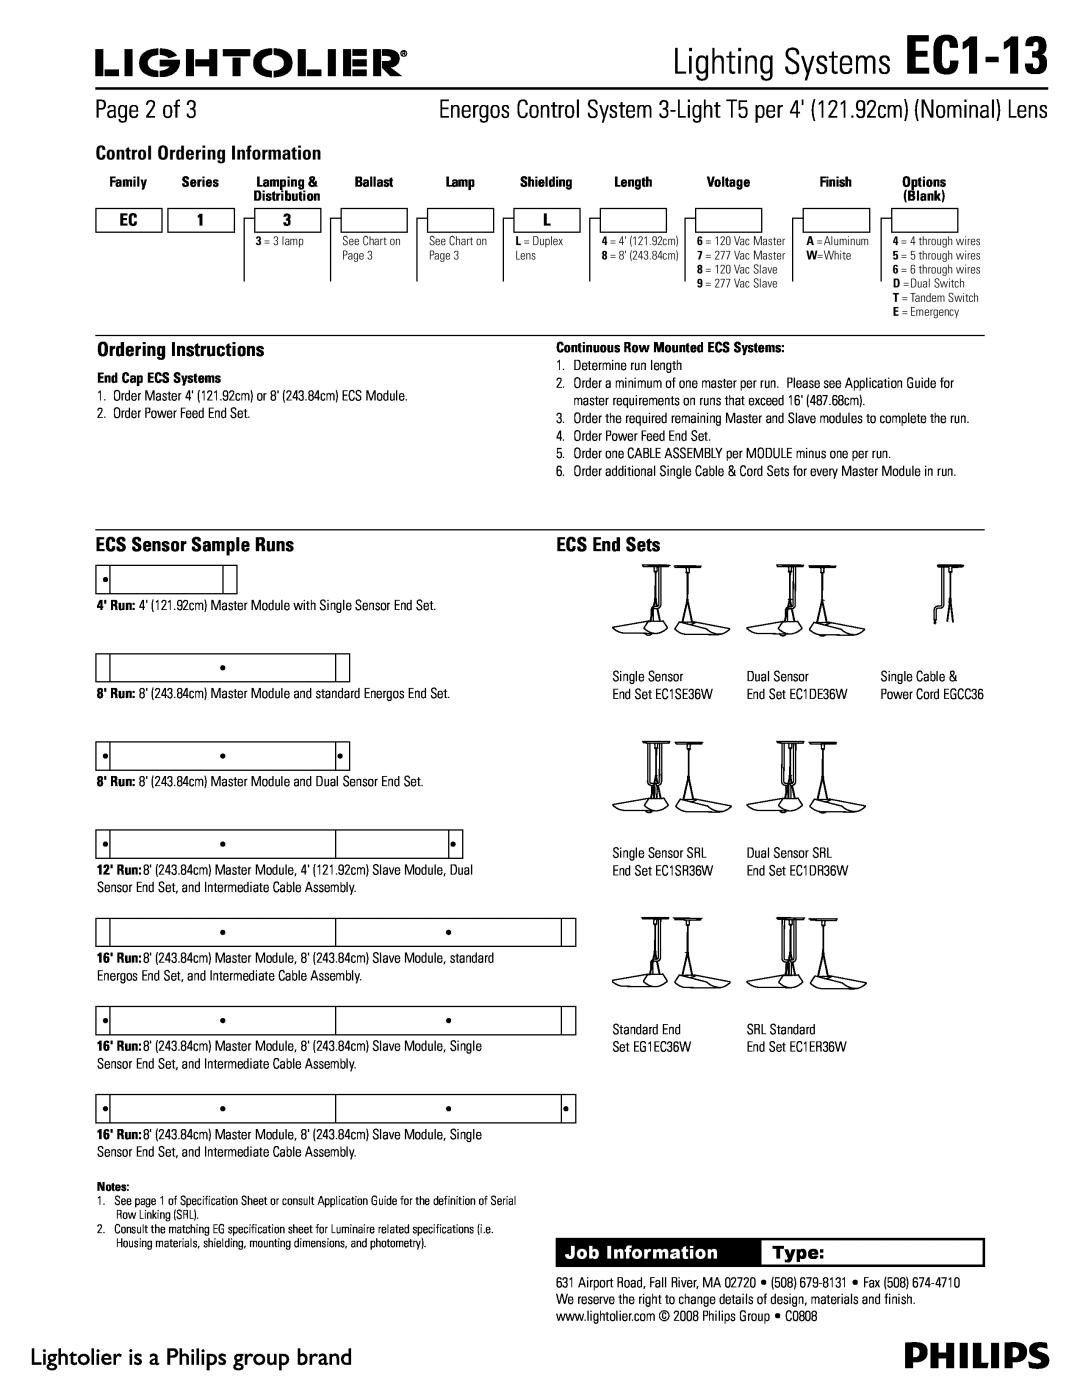 Lightolier EC1-13 Page 2 of, Control Ordering Information, Ordering Instructions, ECS Sensor Sample Runs, Type 